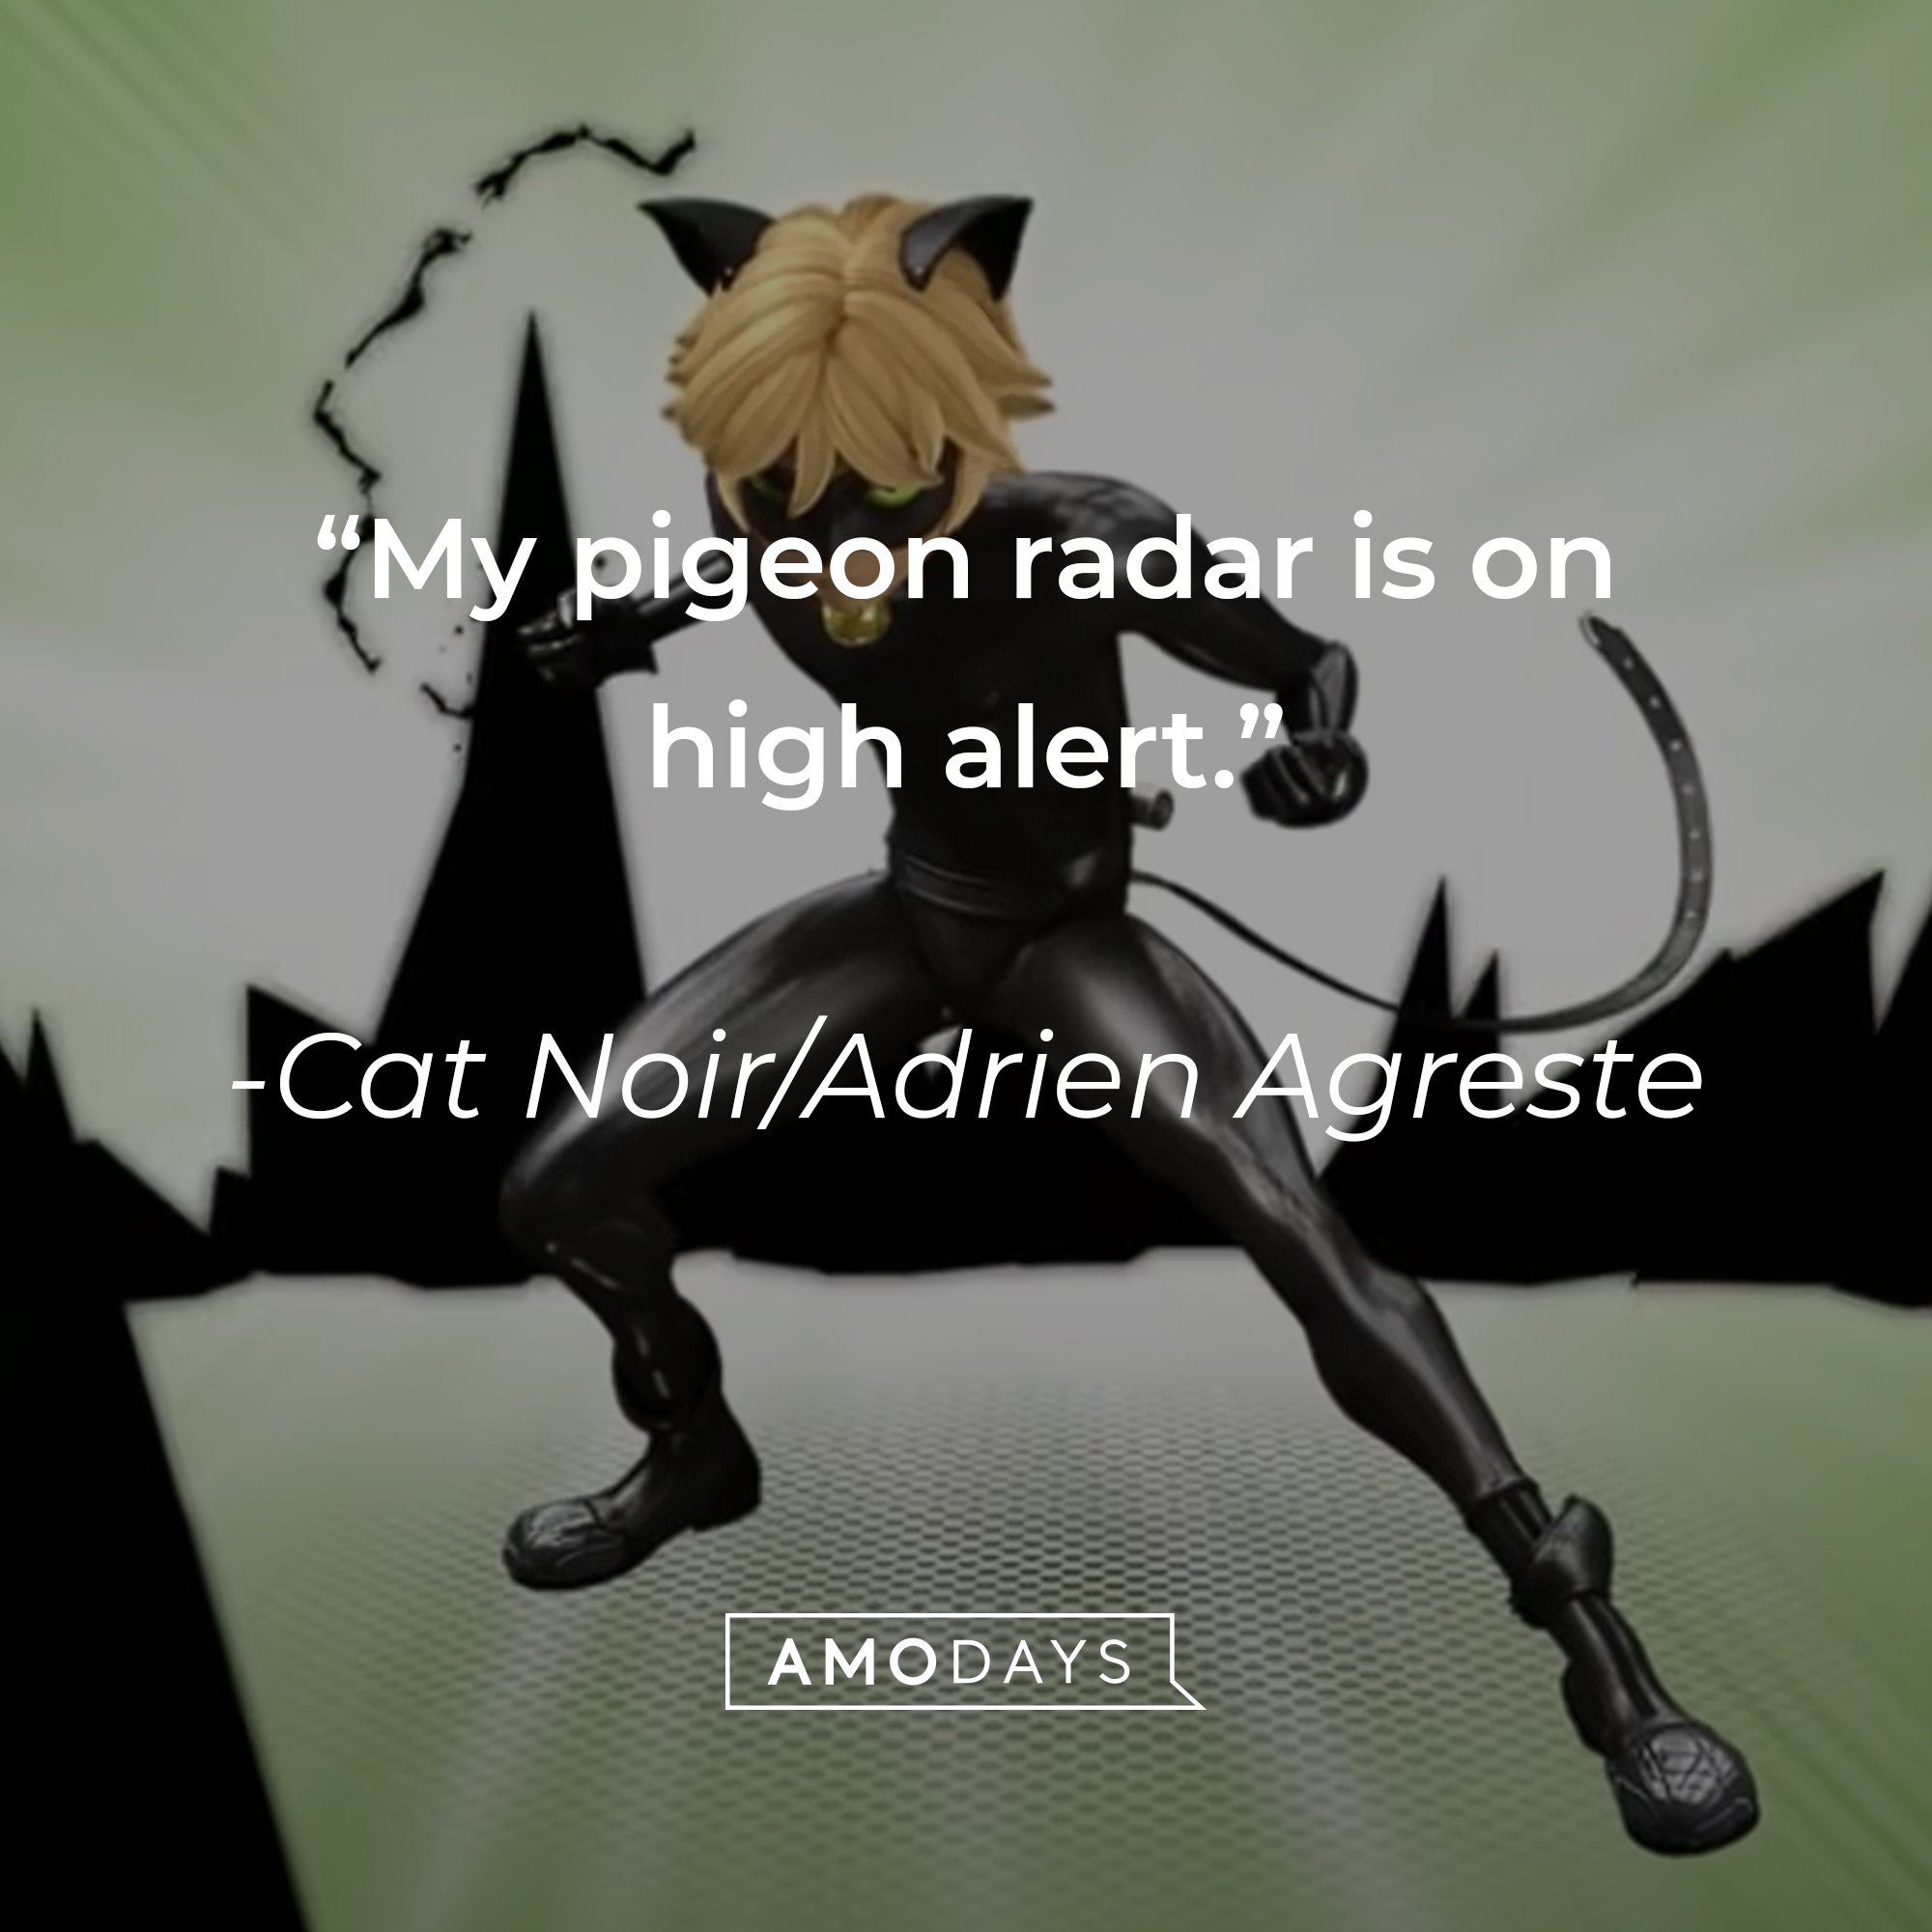 Cat Noir/Adrien Agreste’s quote: “My pigeon radar is on high alert.”  | Image: AmoDays 